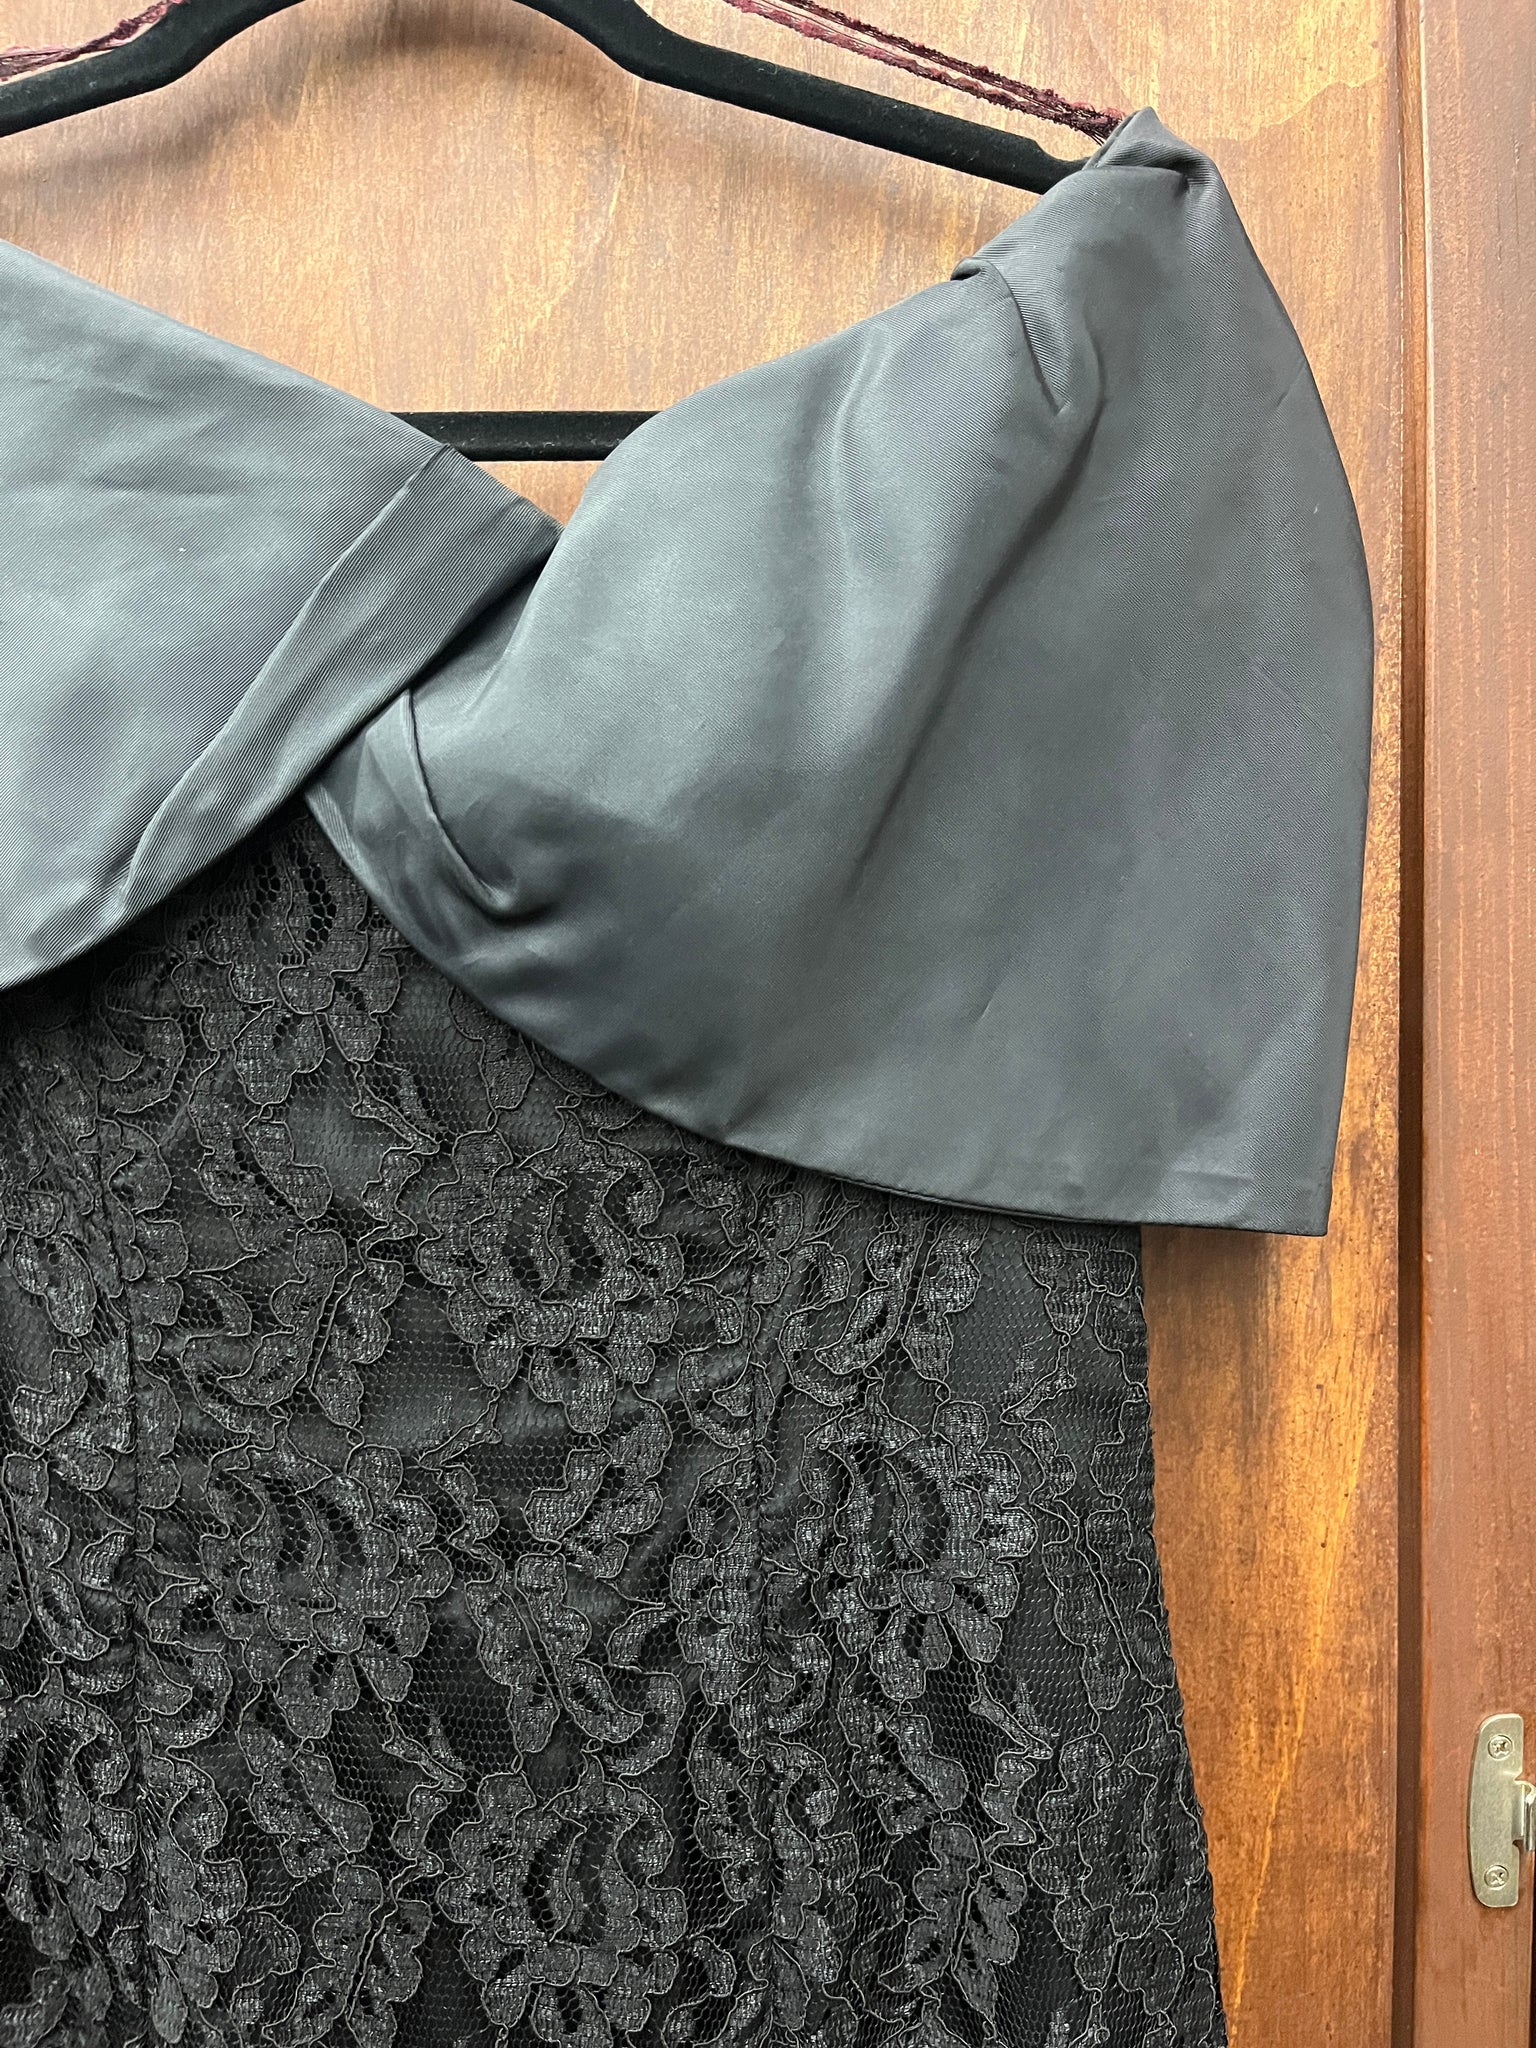 1990s DRESS-Degre-black lace pencil dress satin off shoulder PROM